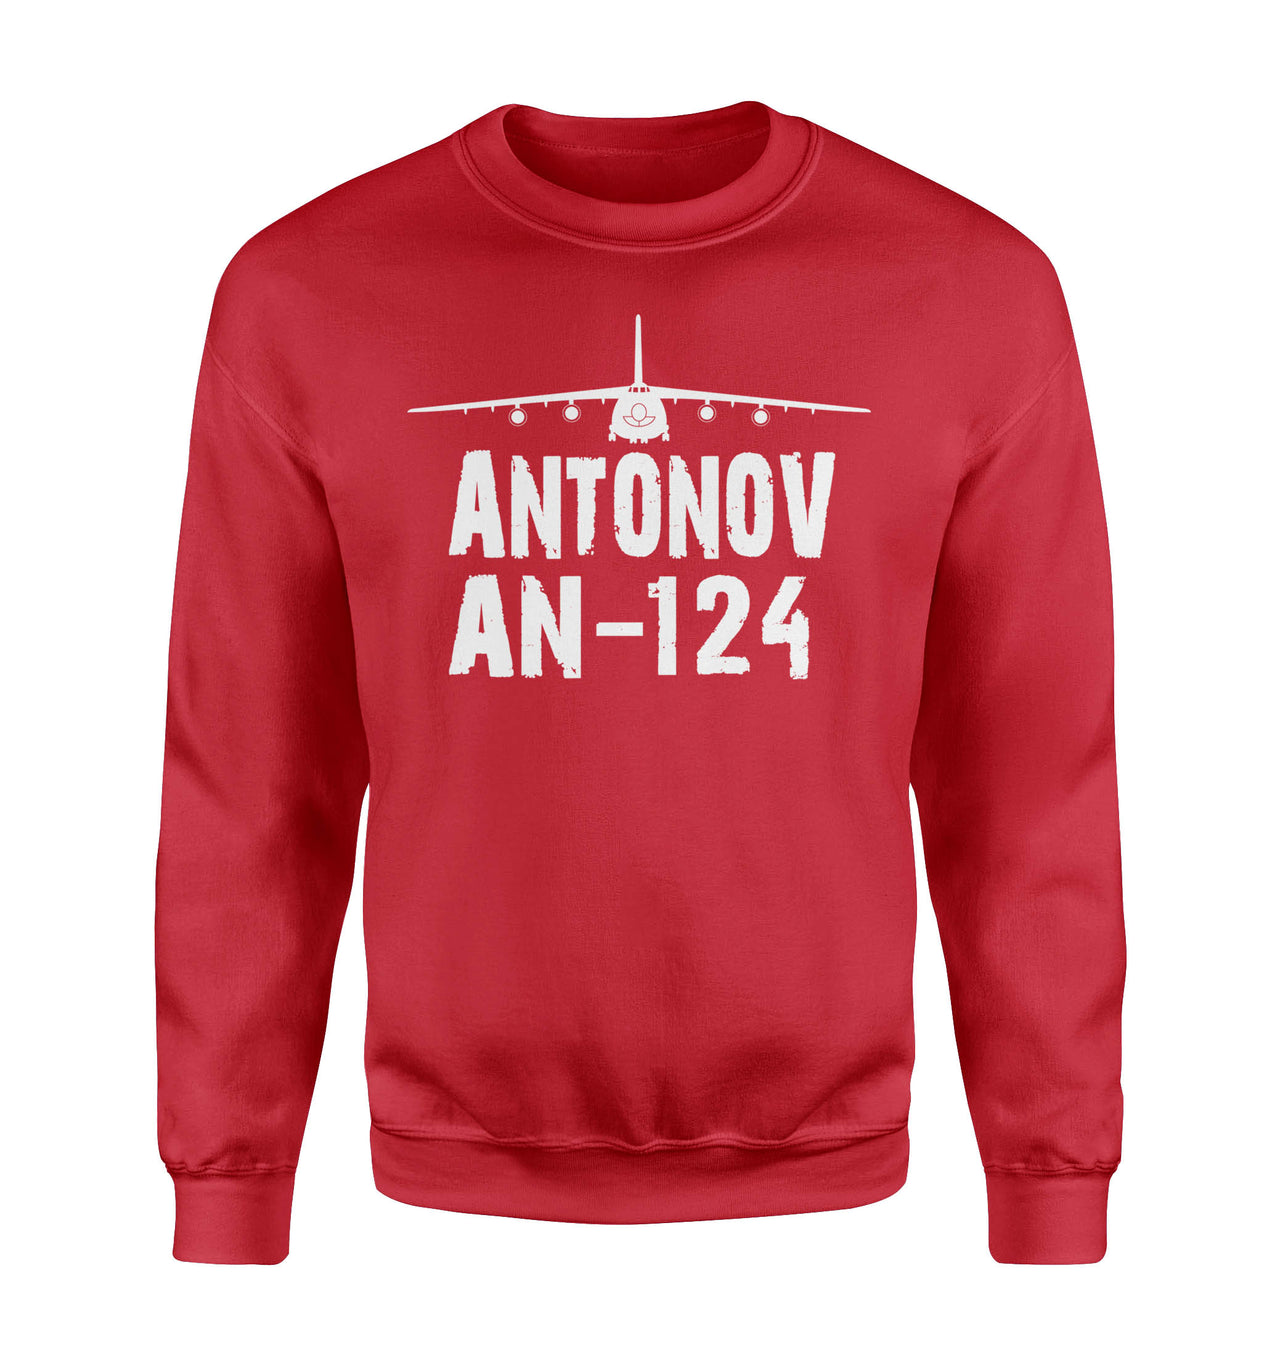 Antonov AN-124 & Plane Designed Sweatshirts